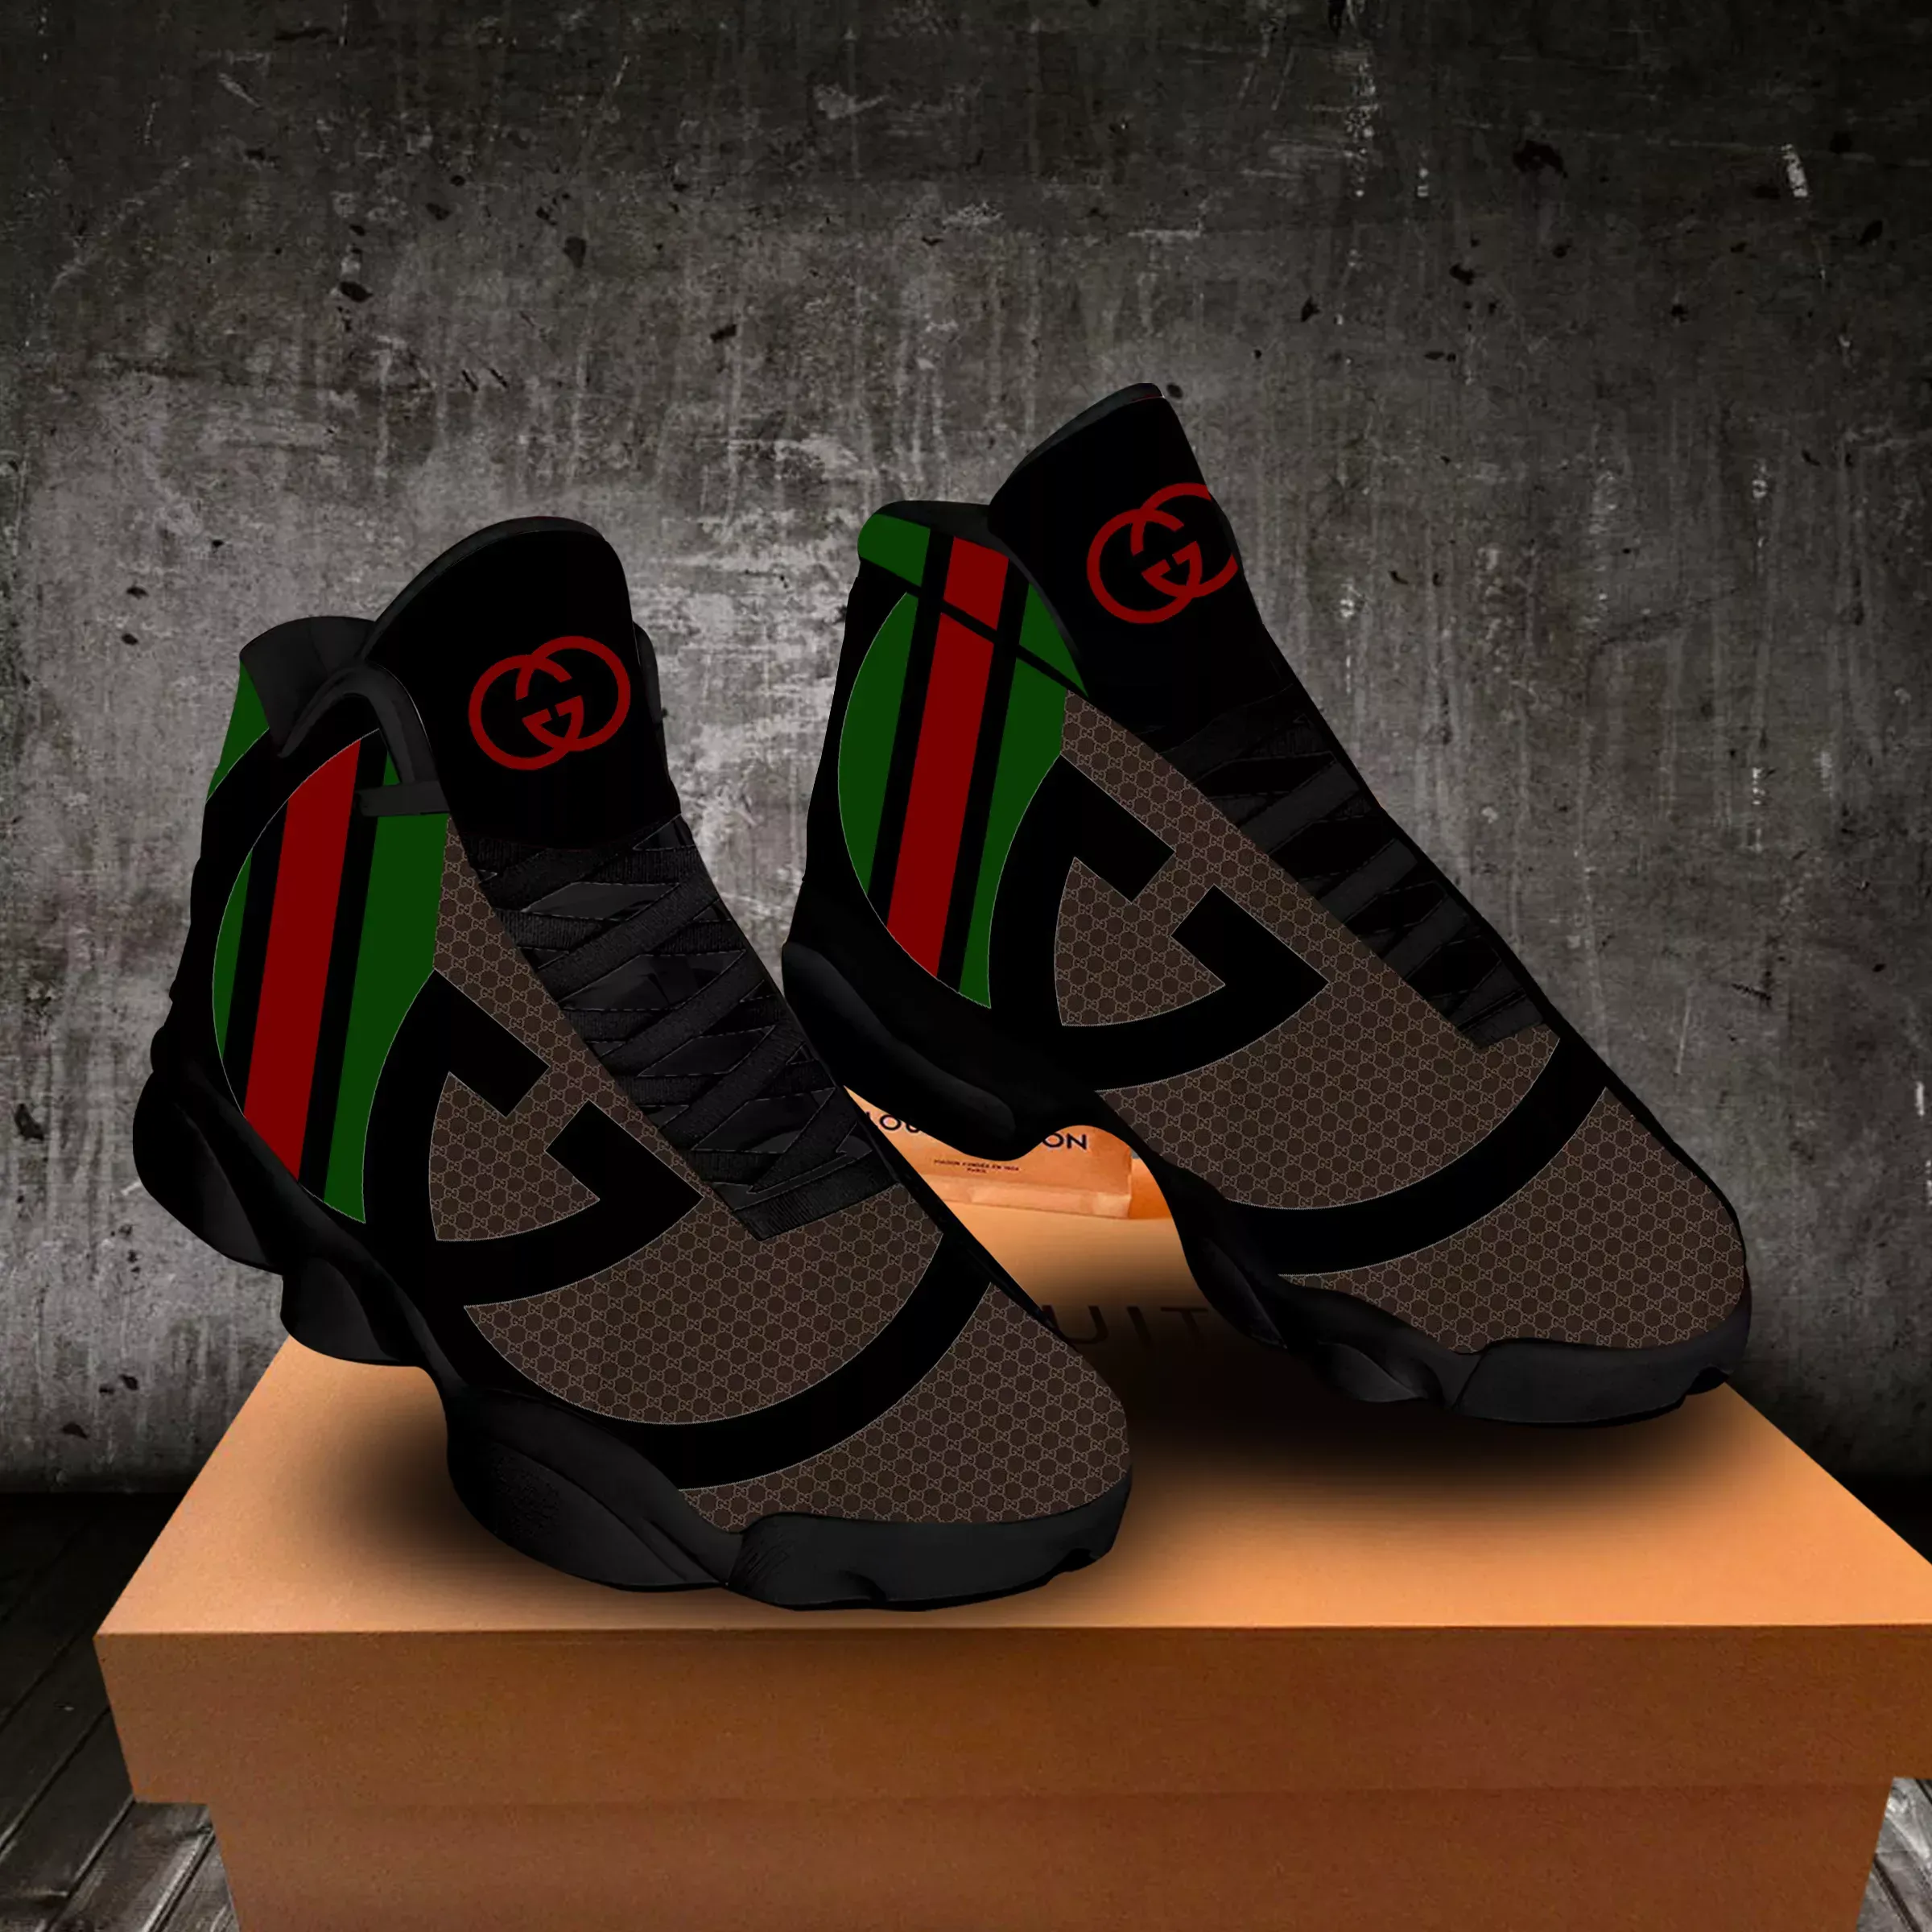 Gucci Black Air Jordan 13 Shoes Trending Fashion Luxury Sneakers